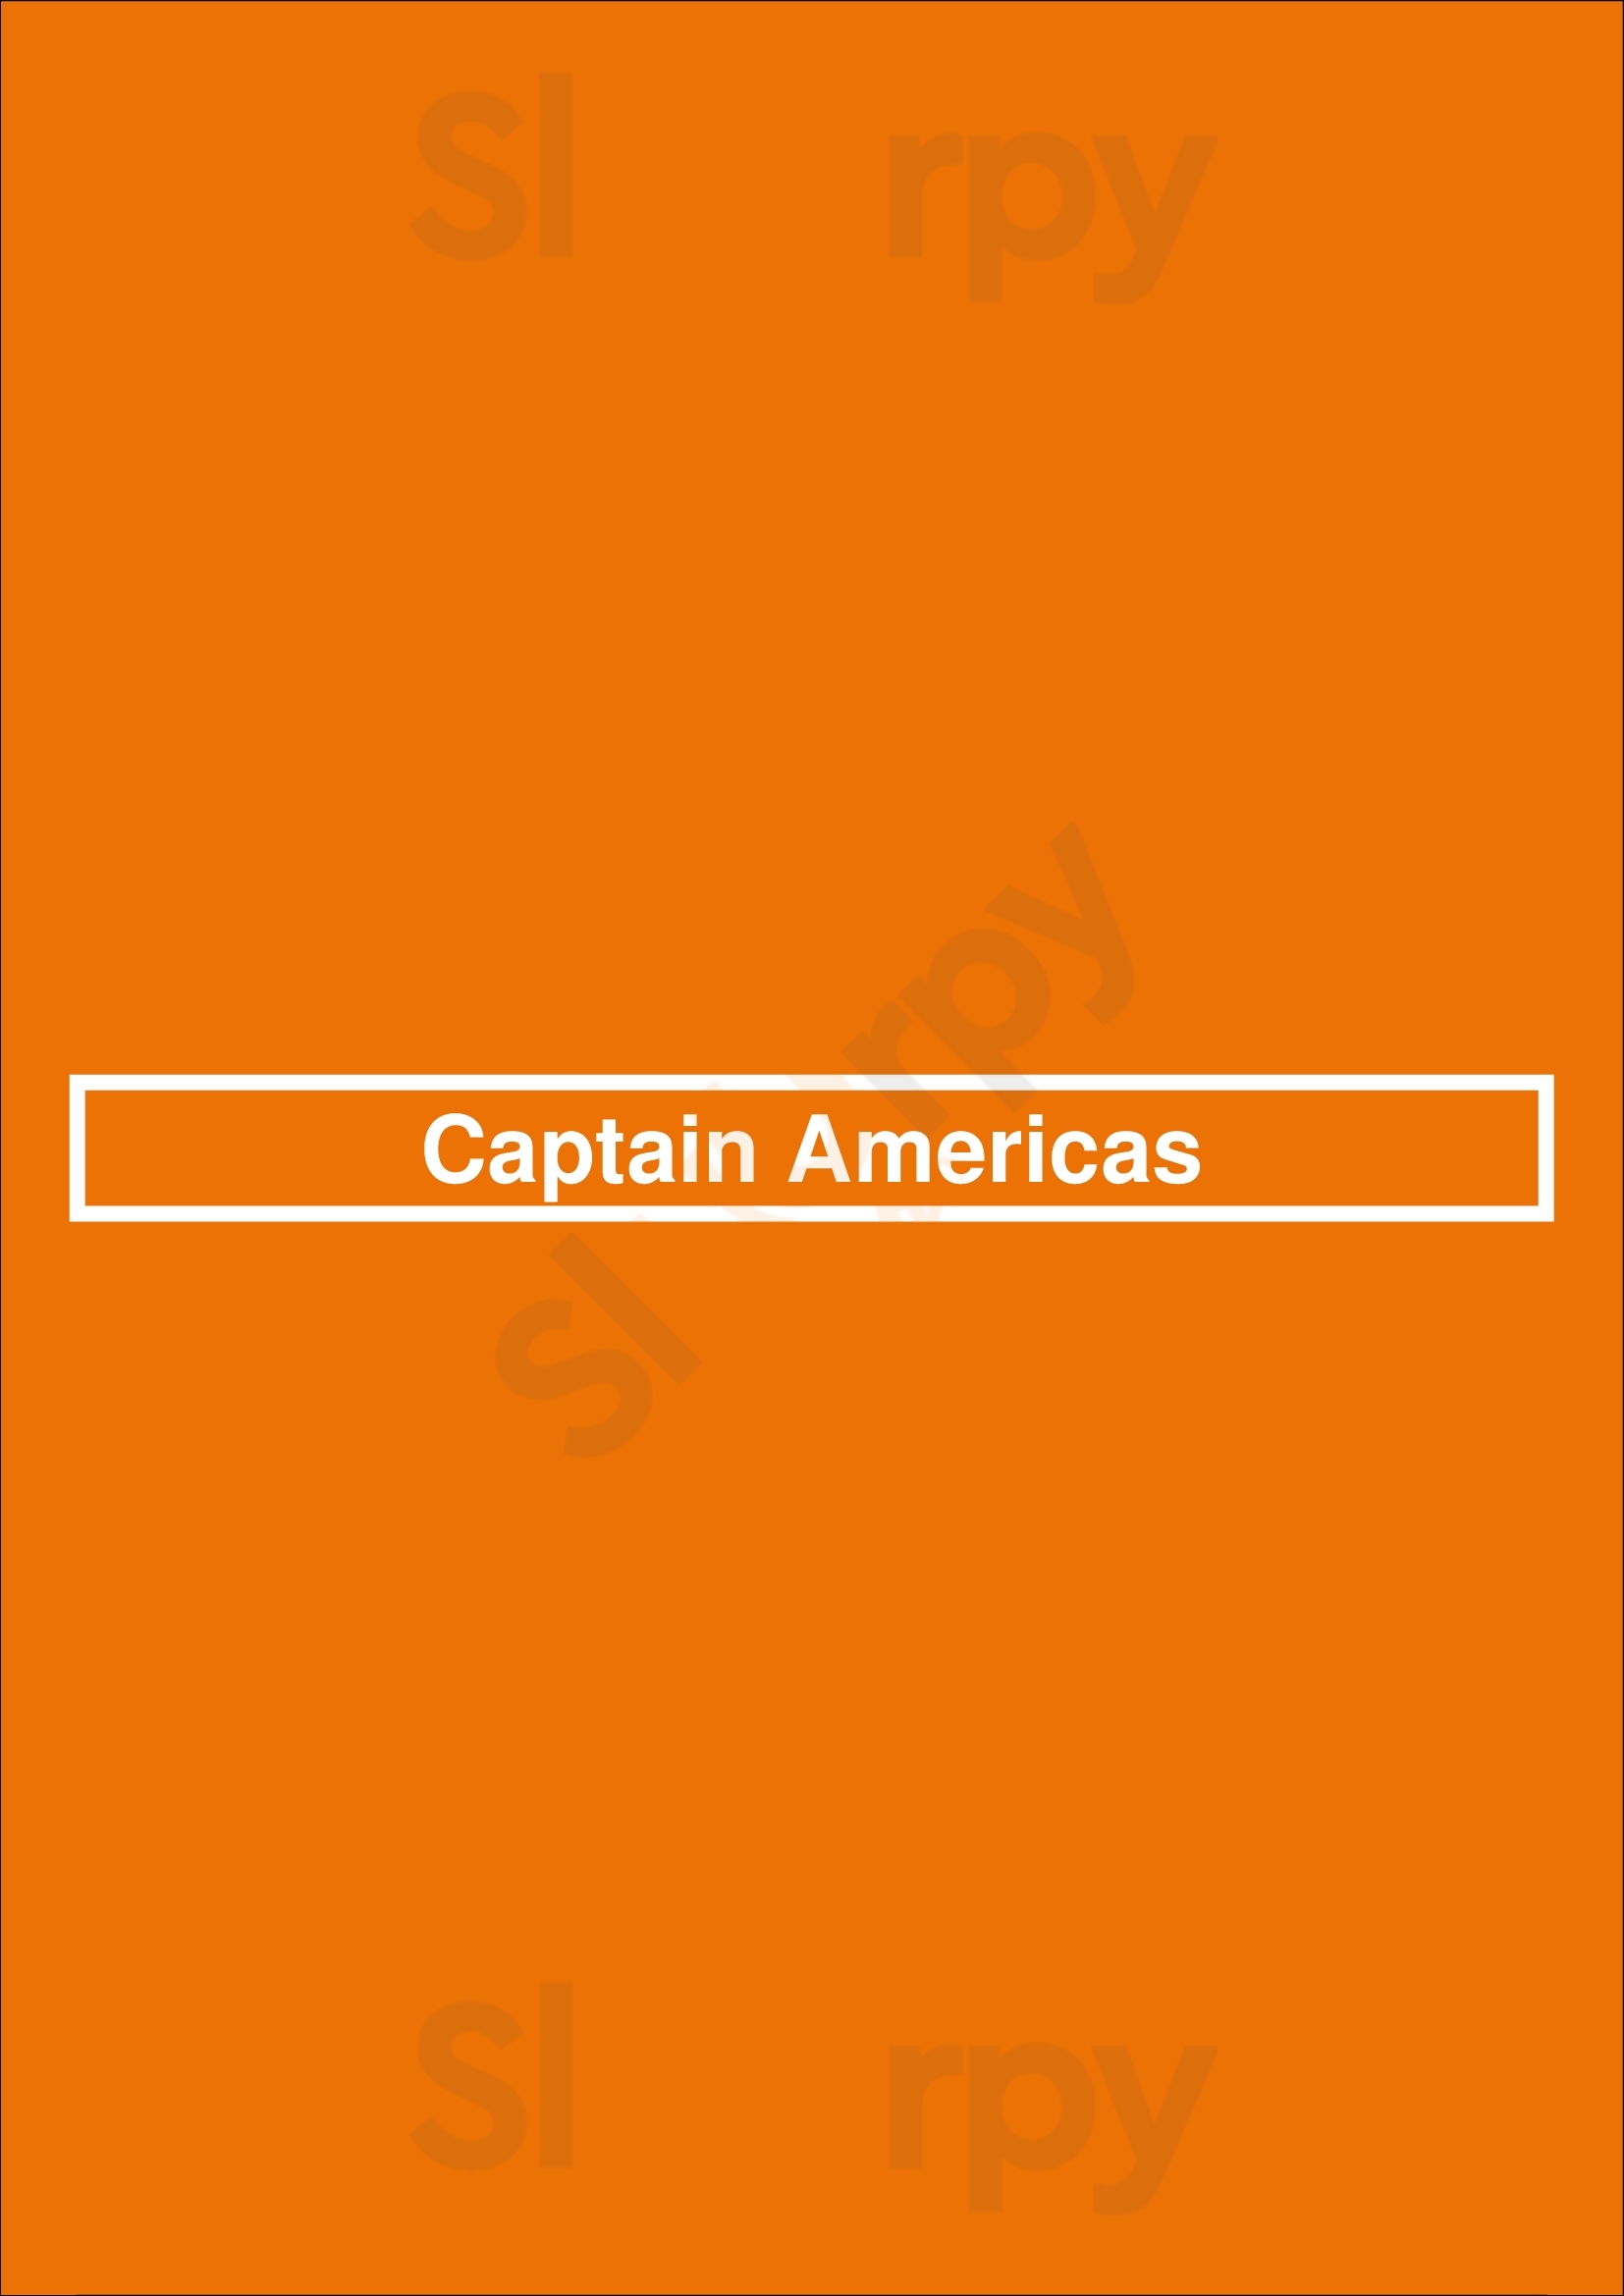 Captain Americas Dublin Menu - 1